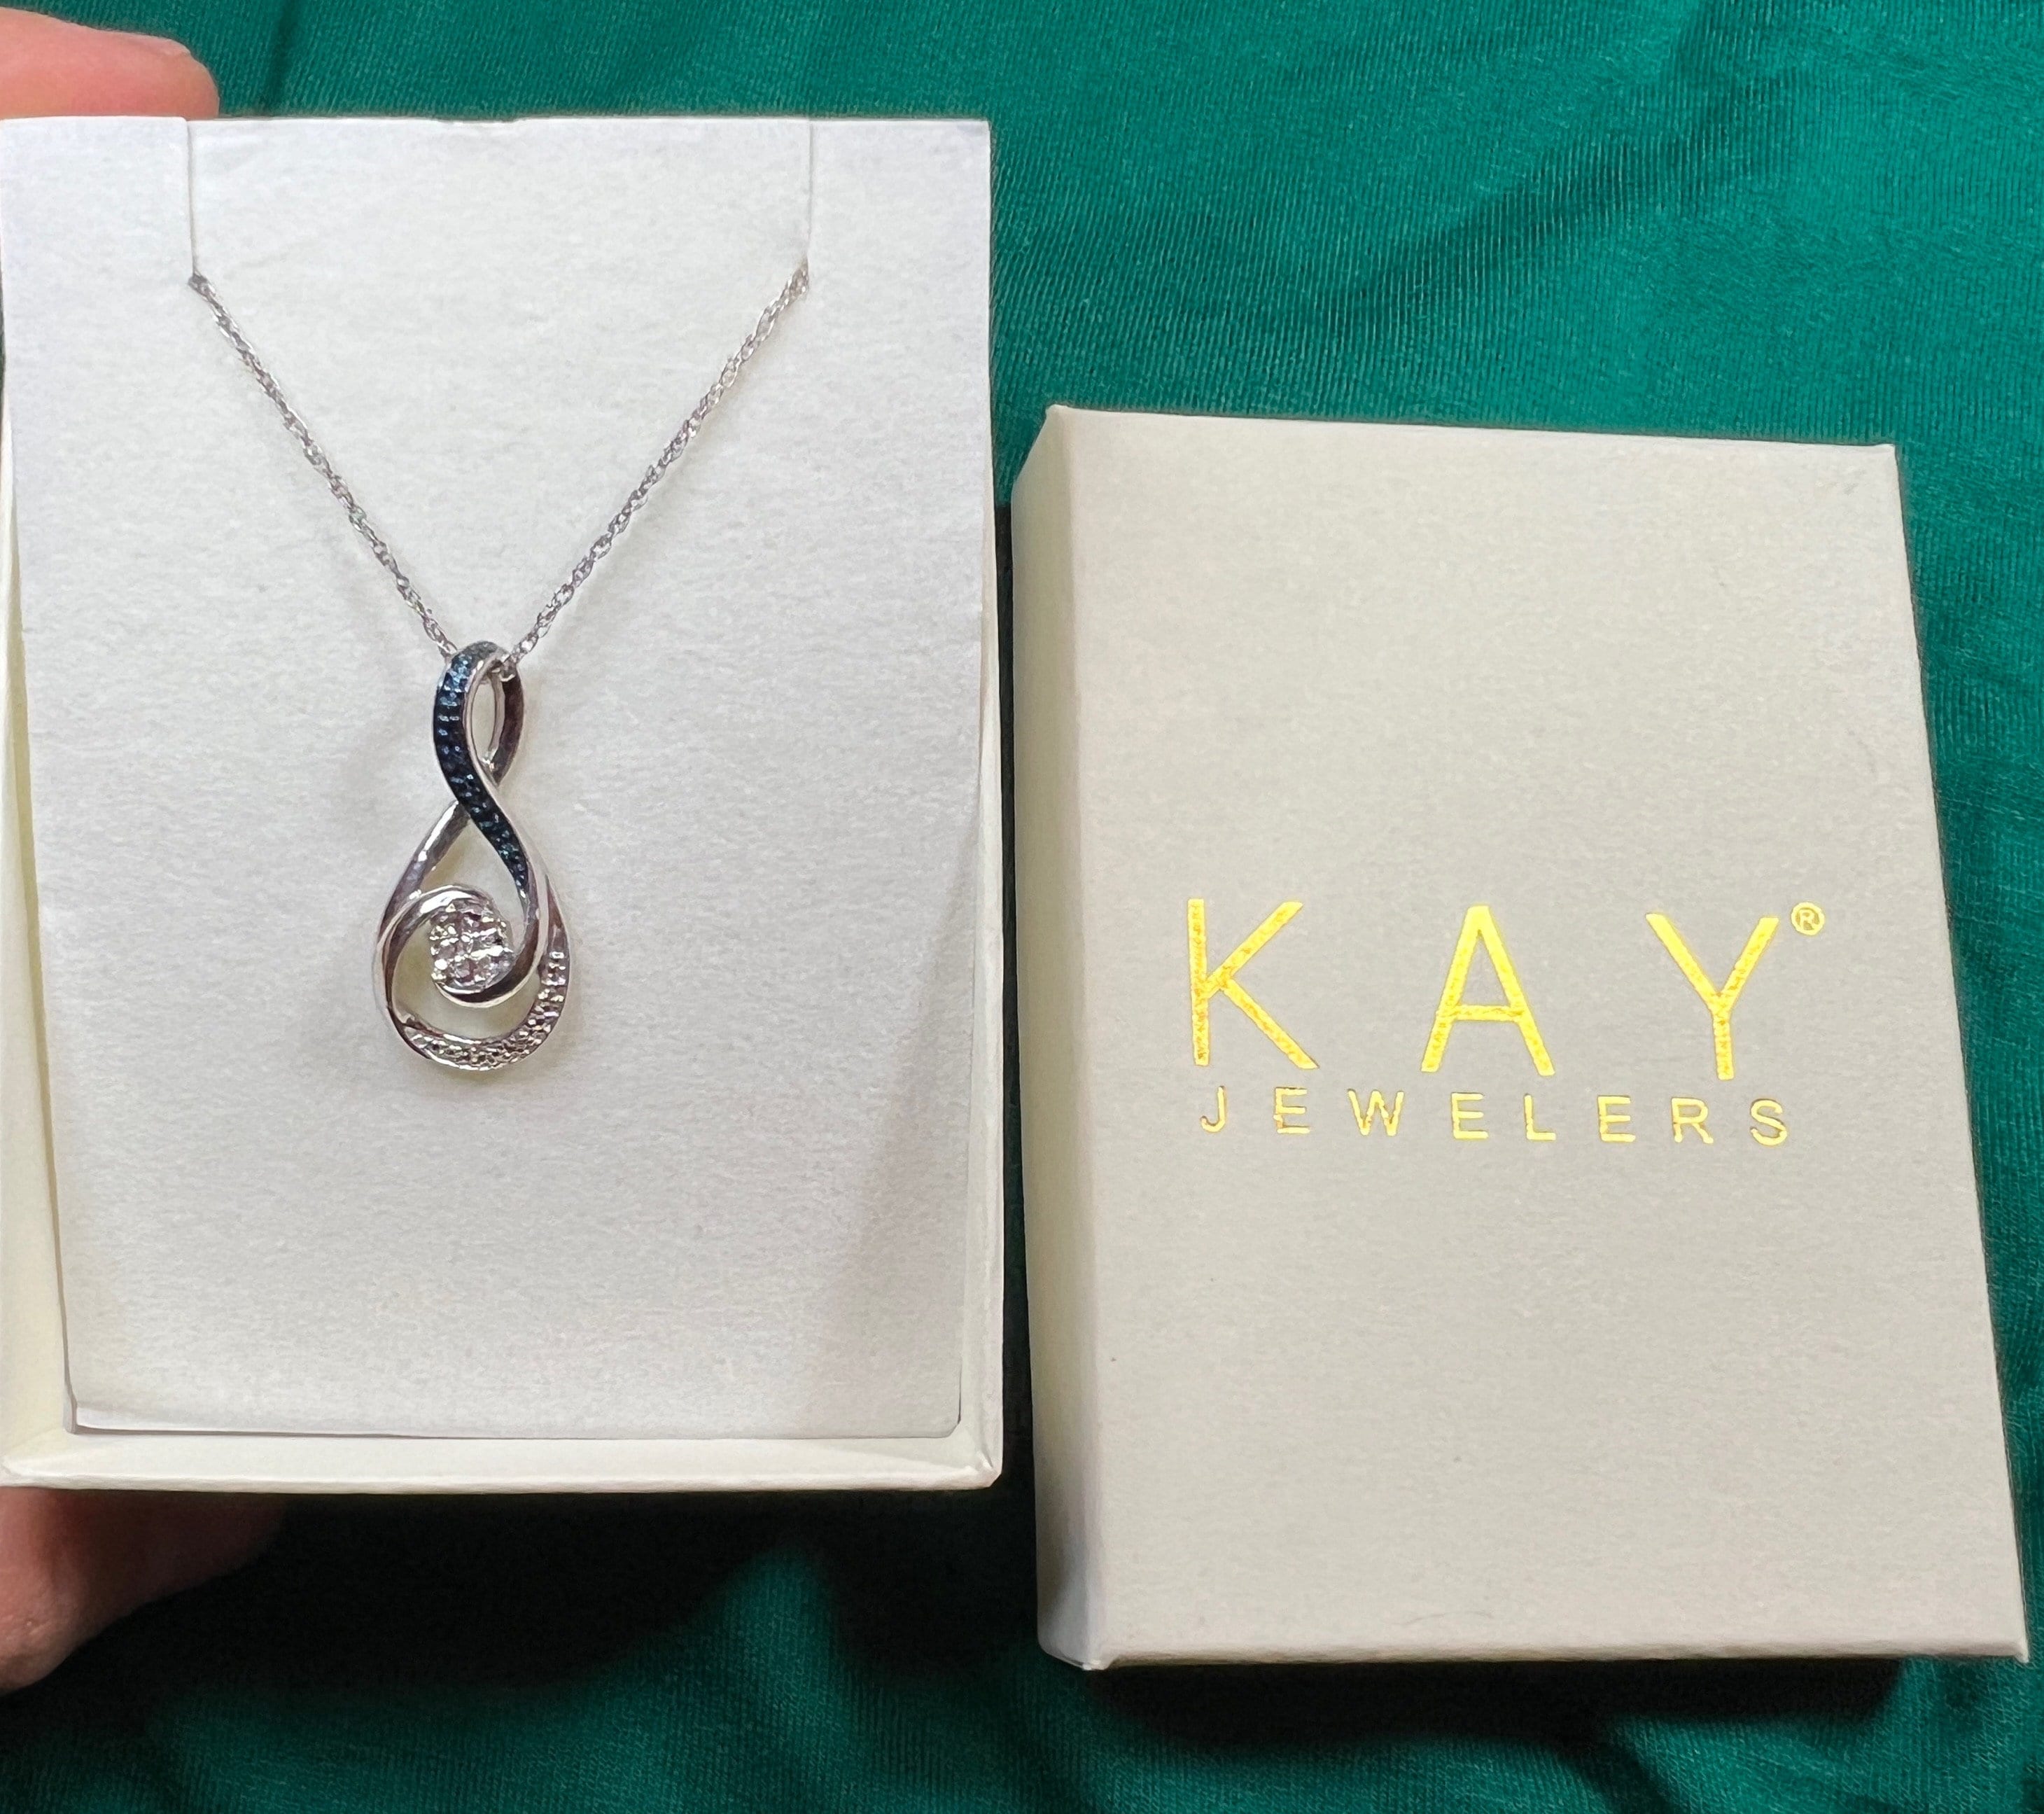 Kay jewelers sterling - Gem